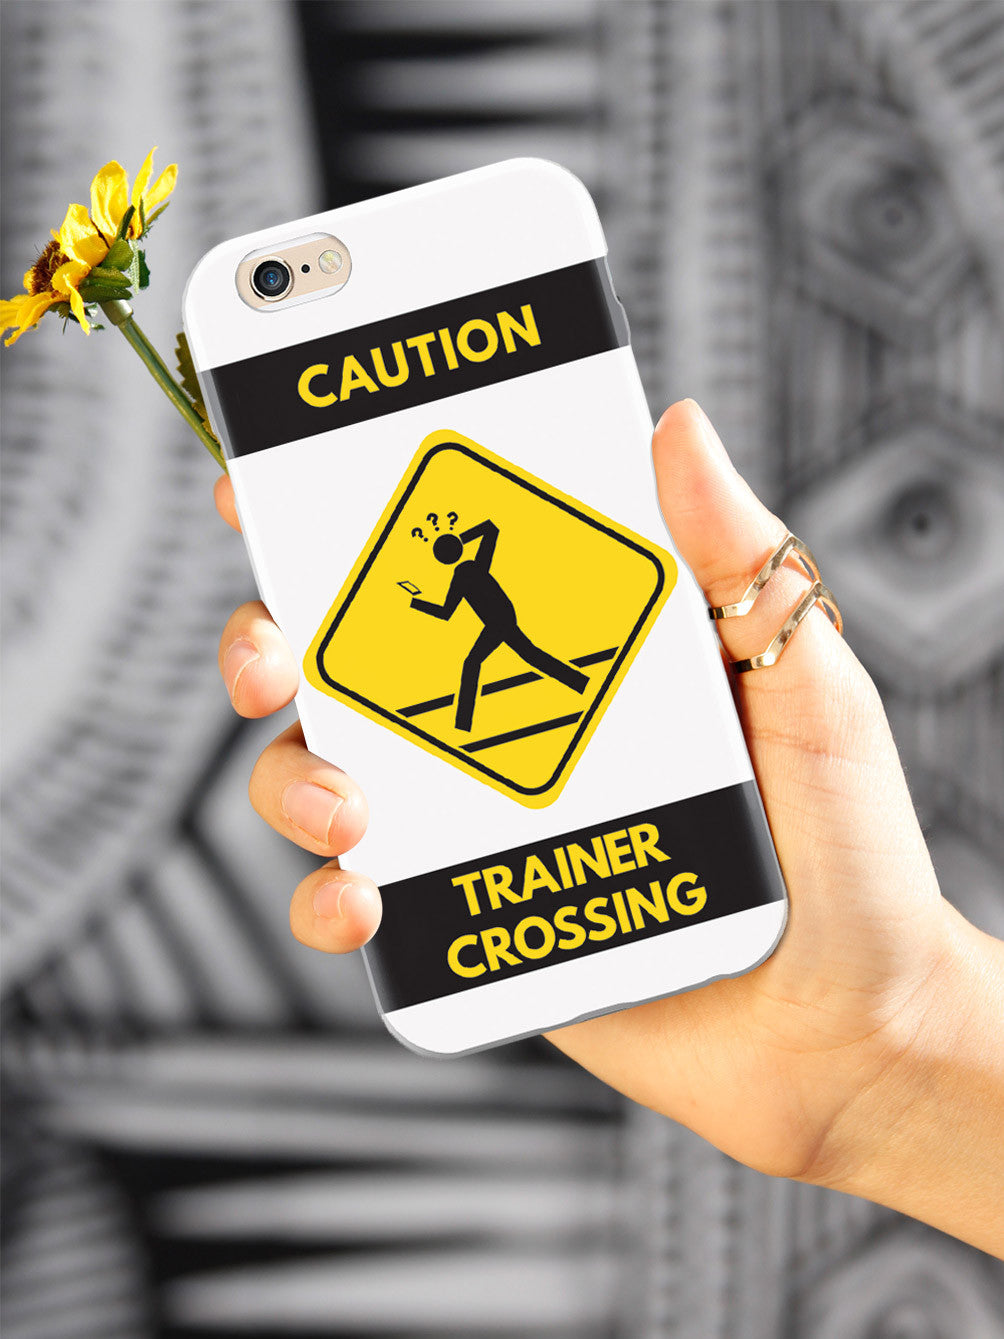 Caution Trainer Crossing - White Case